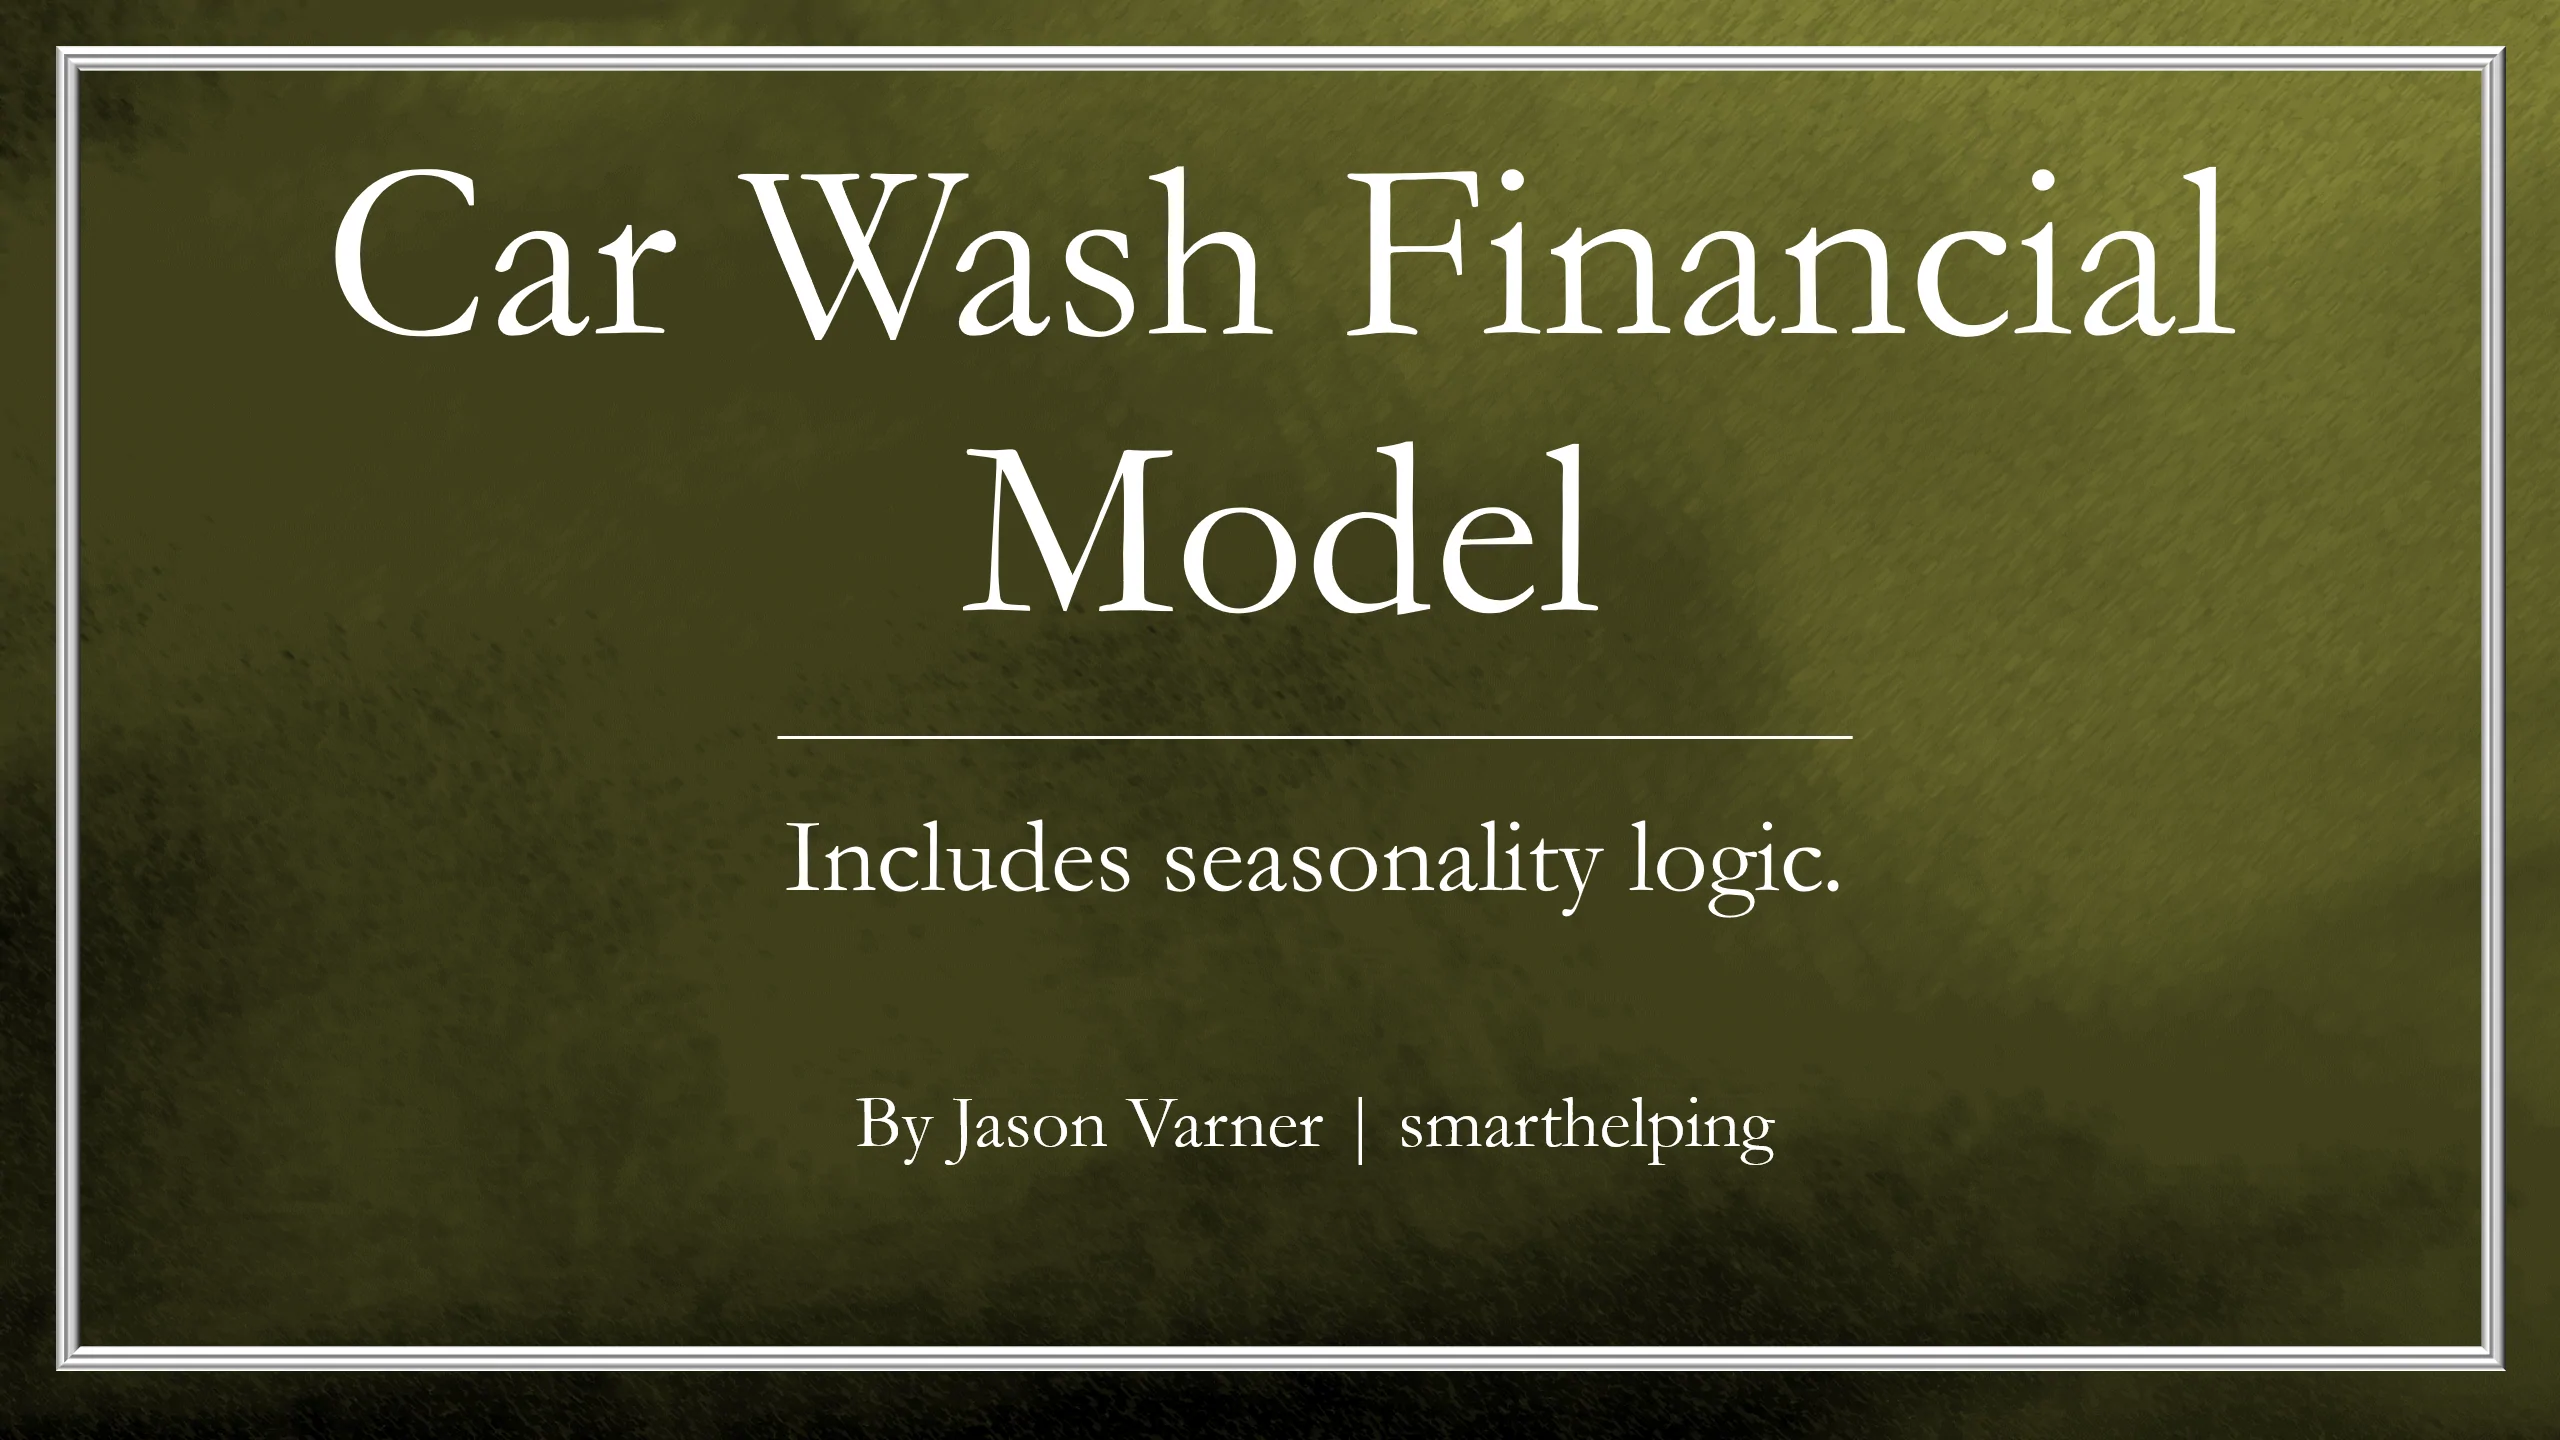 Car Wash Financial Model: 5 Years and Seasonality Logic